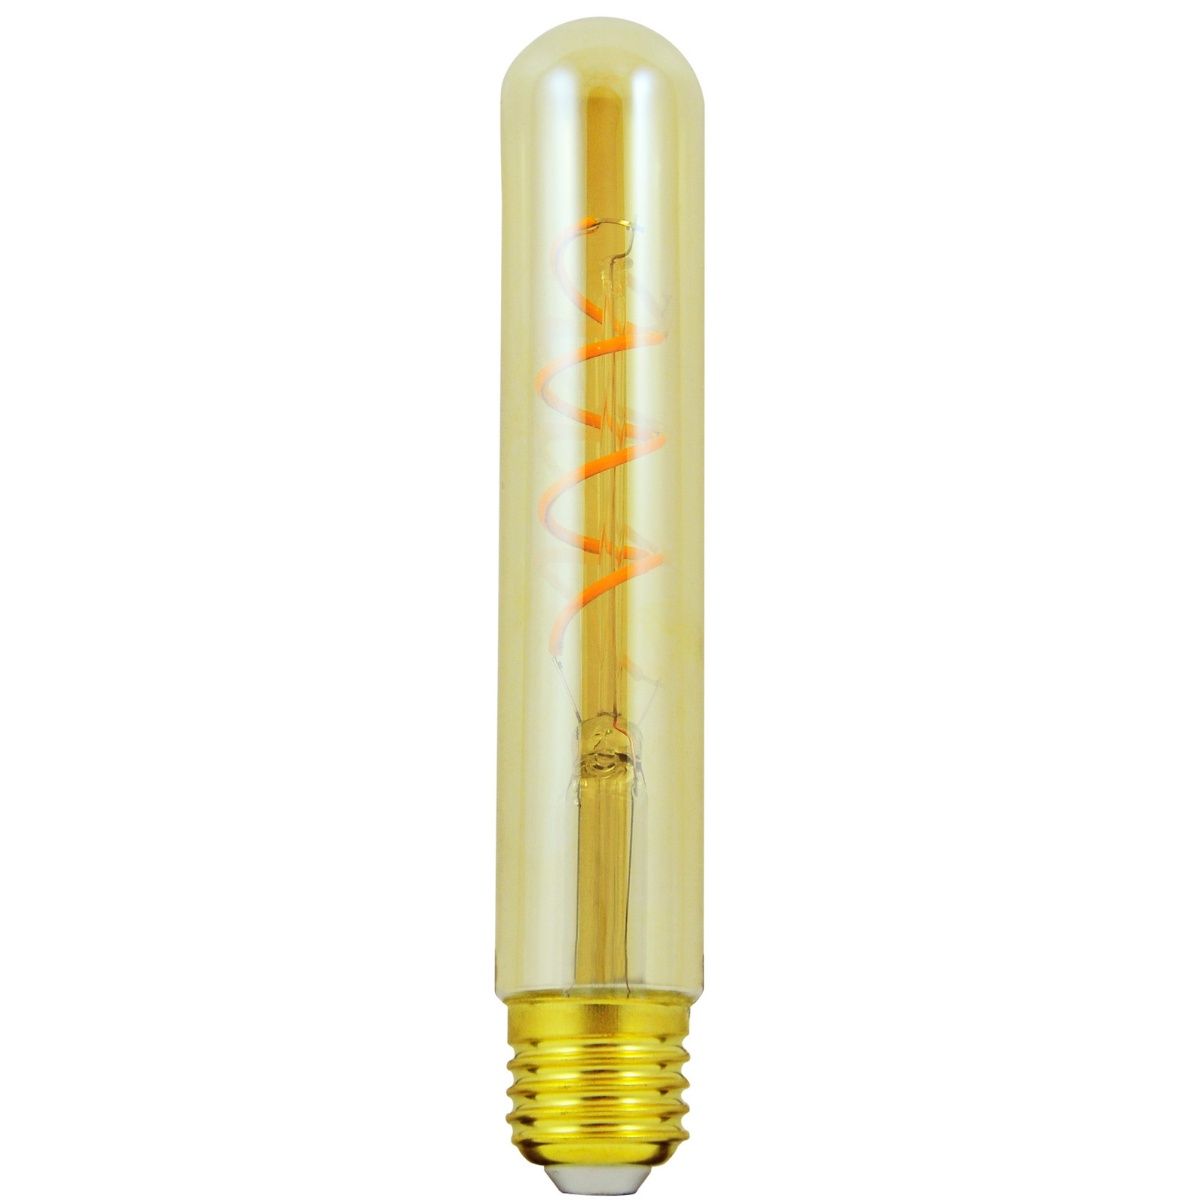 2 x żarówka Goldlux LED E27 Filament T30 4W Decovintage Amber 3000K